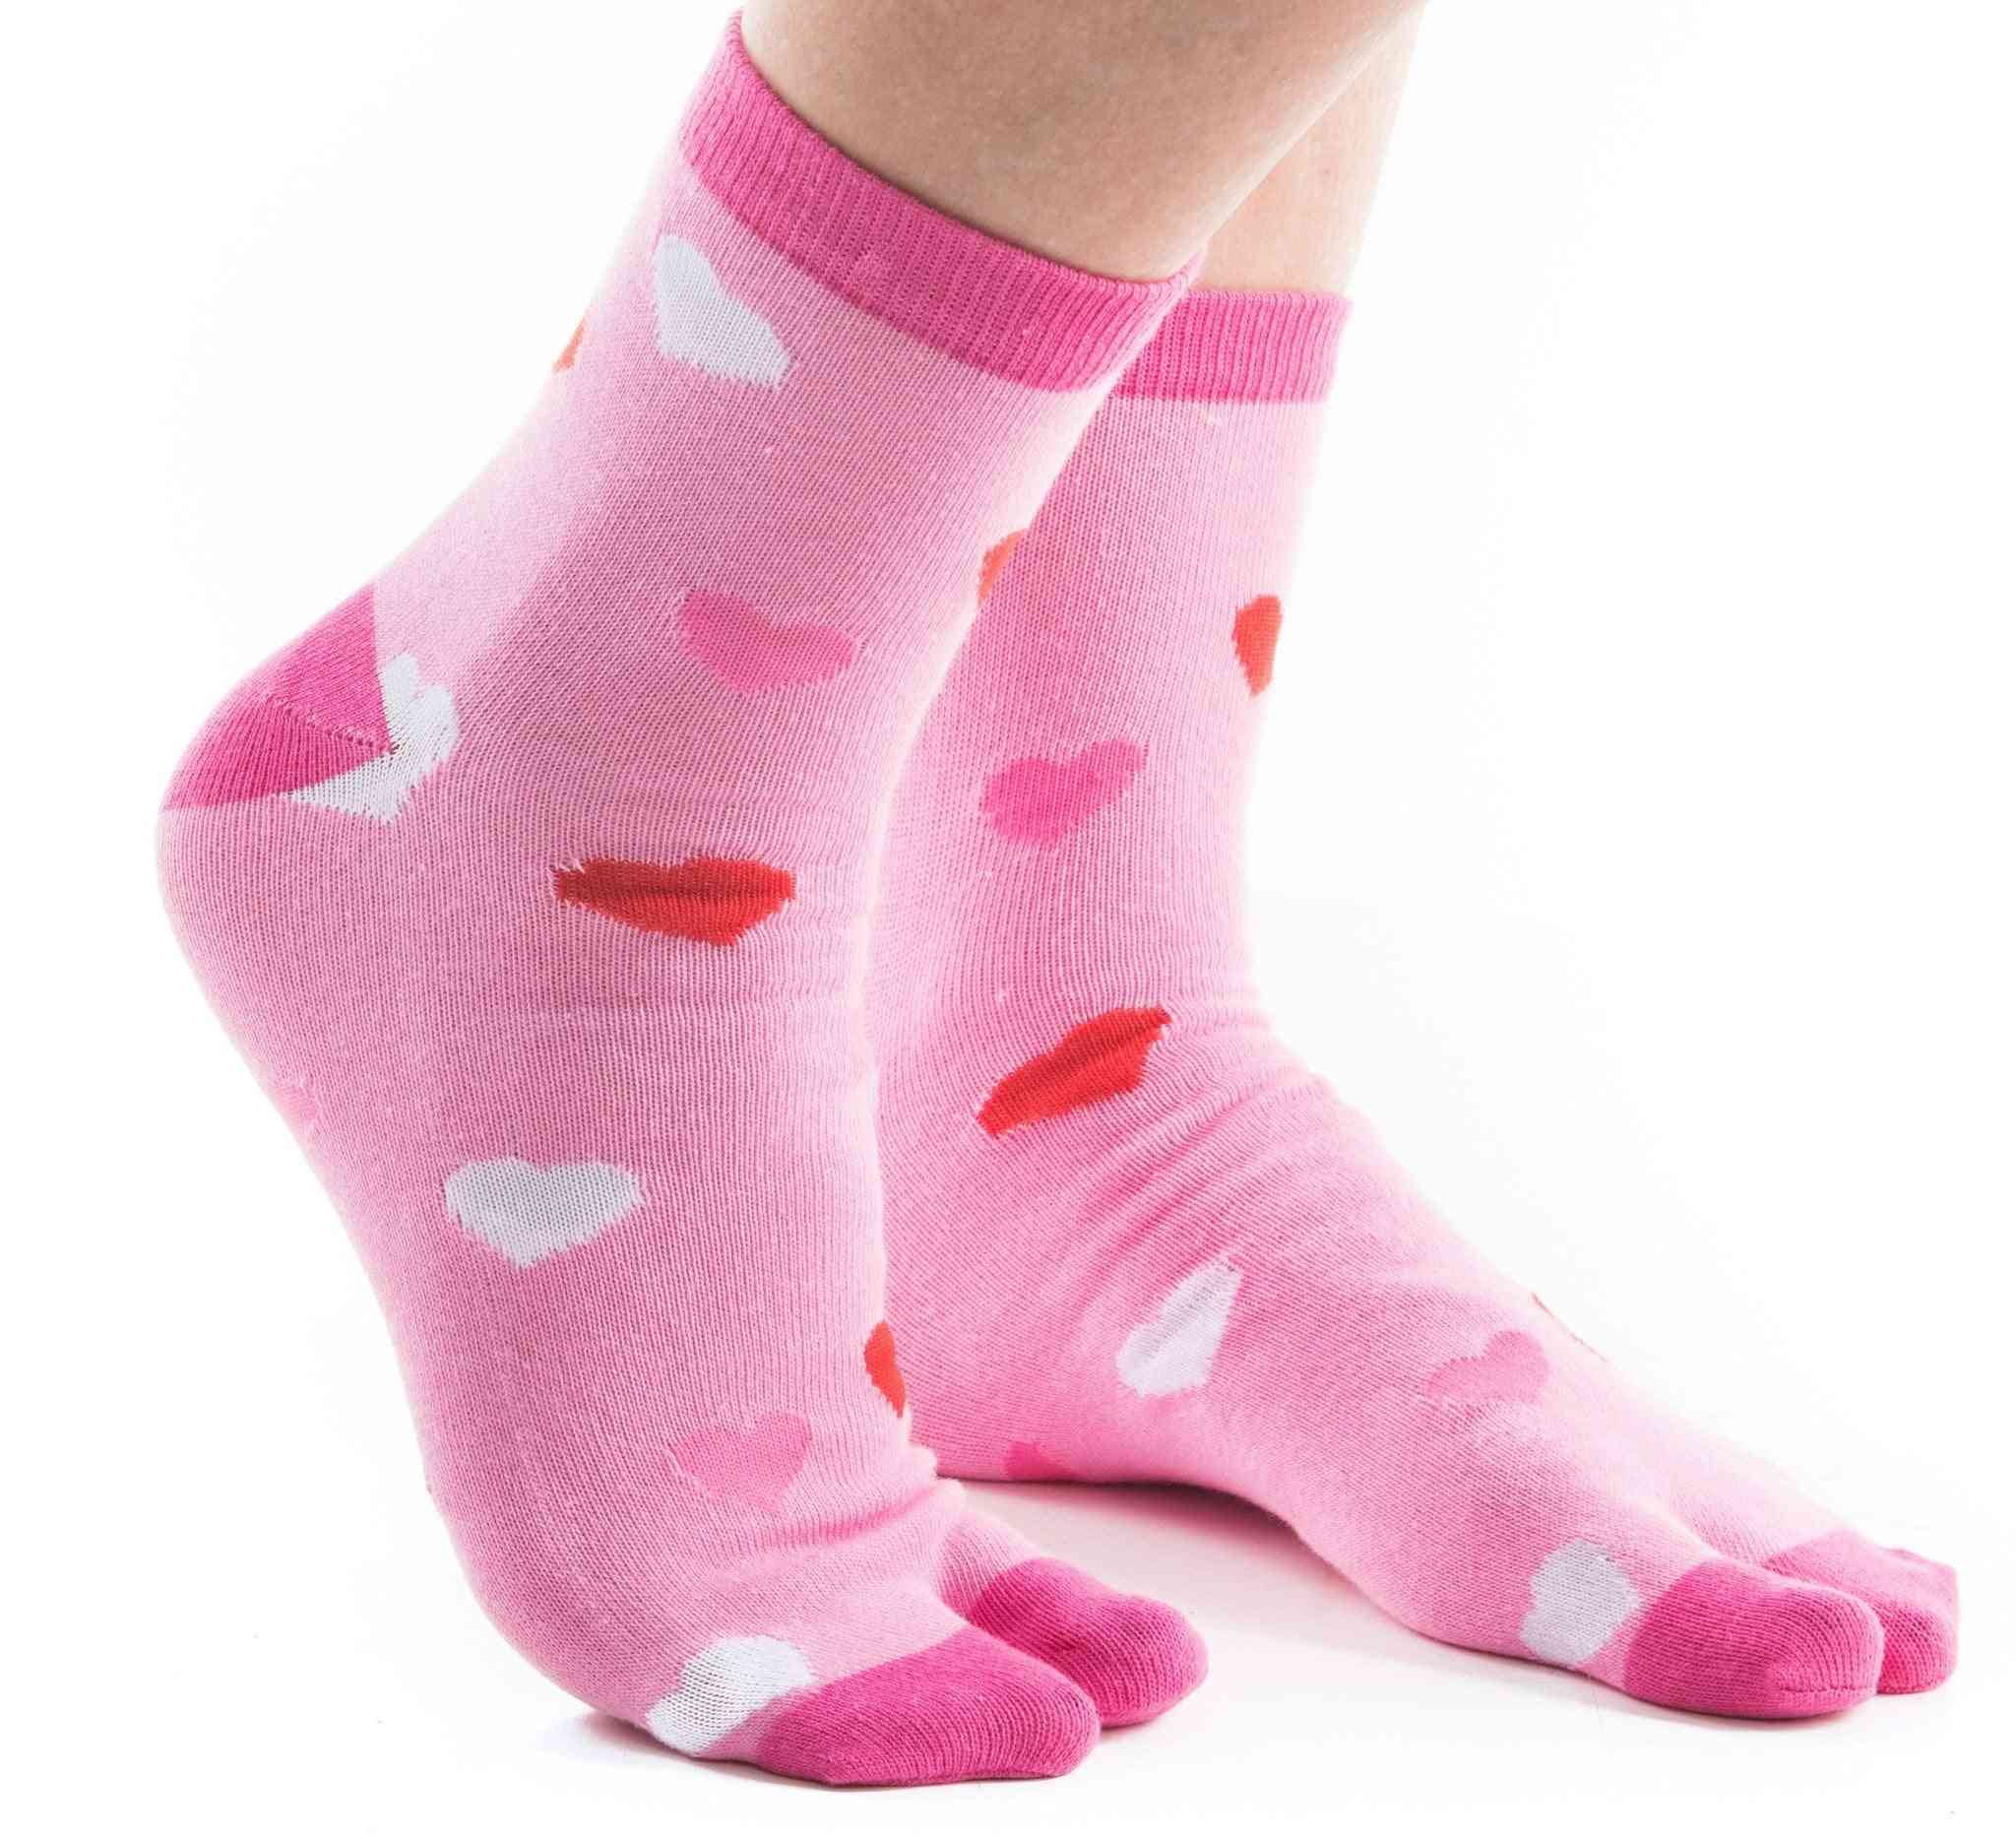 Flip Flop Socks - Pink Valentine Love Hearts Printed